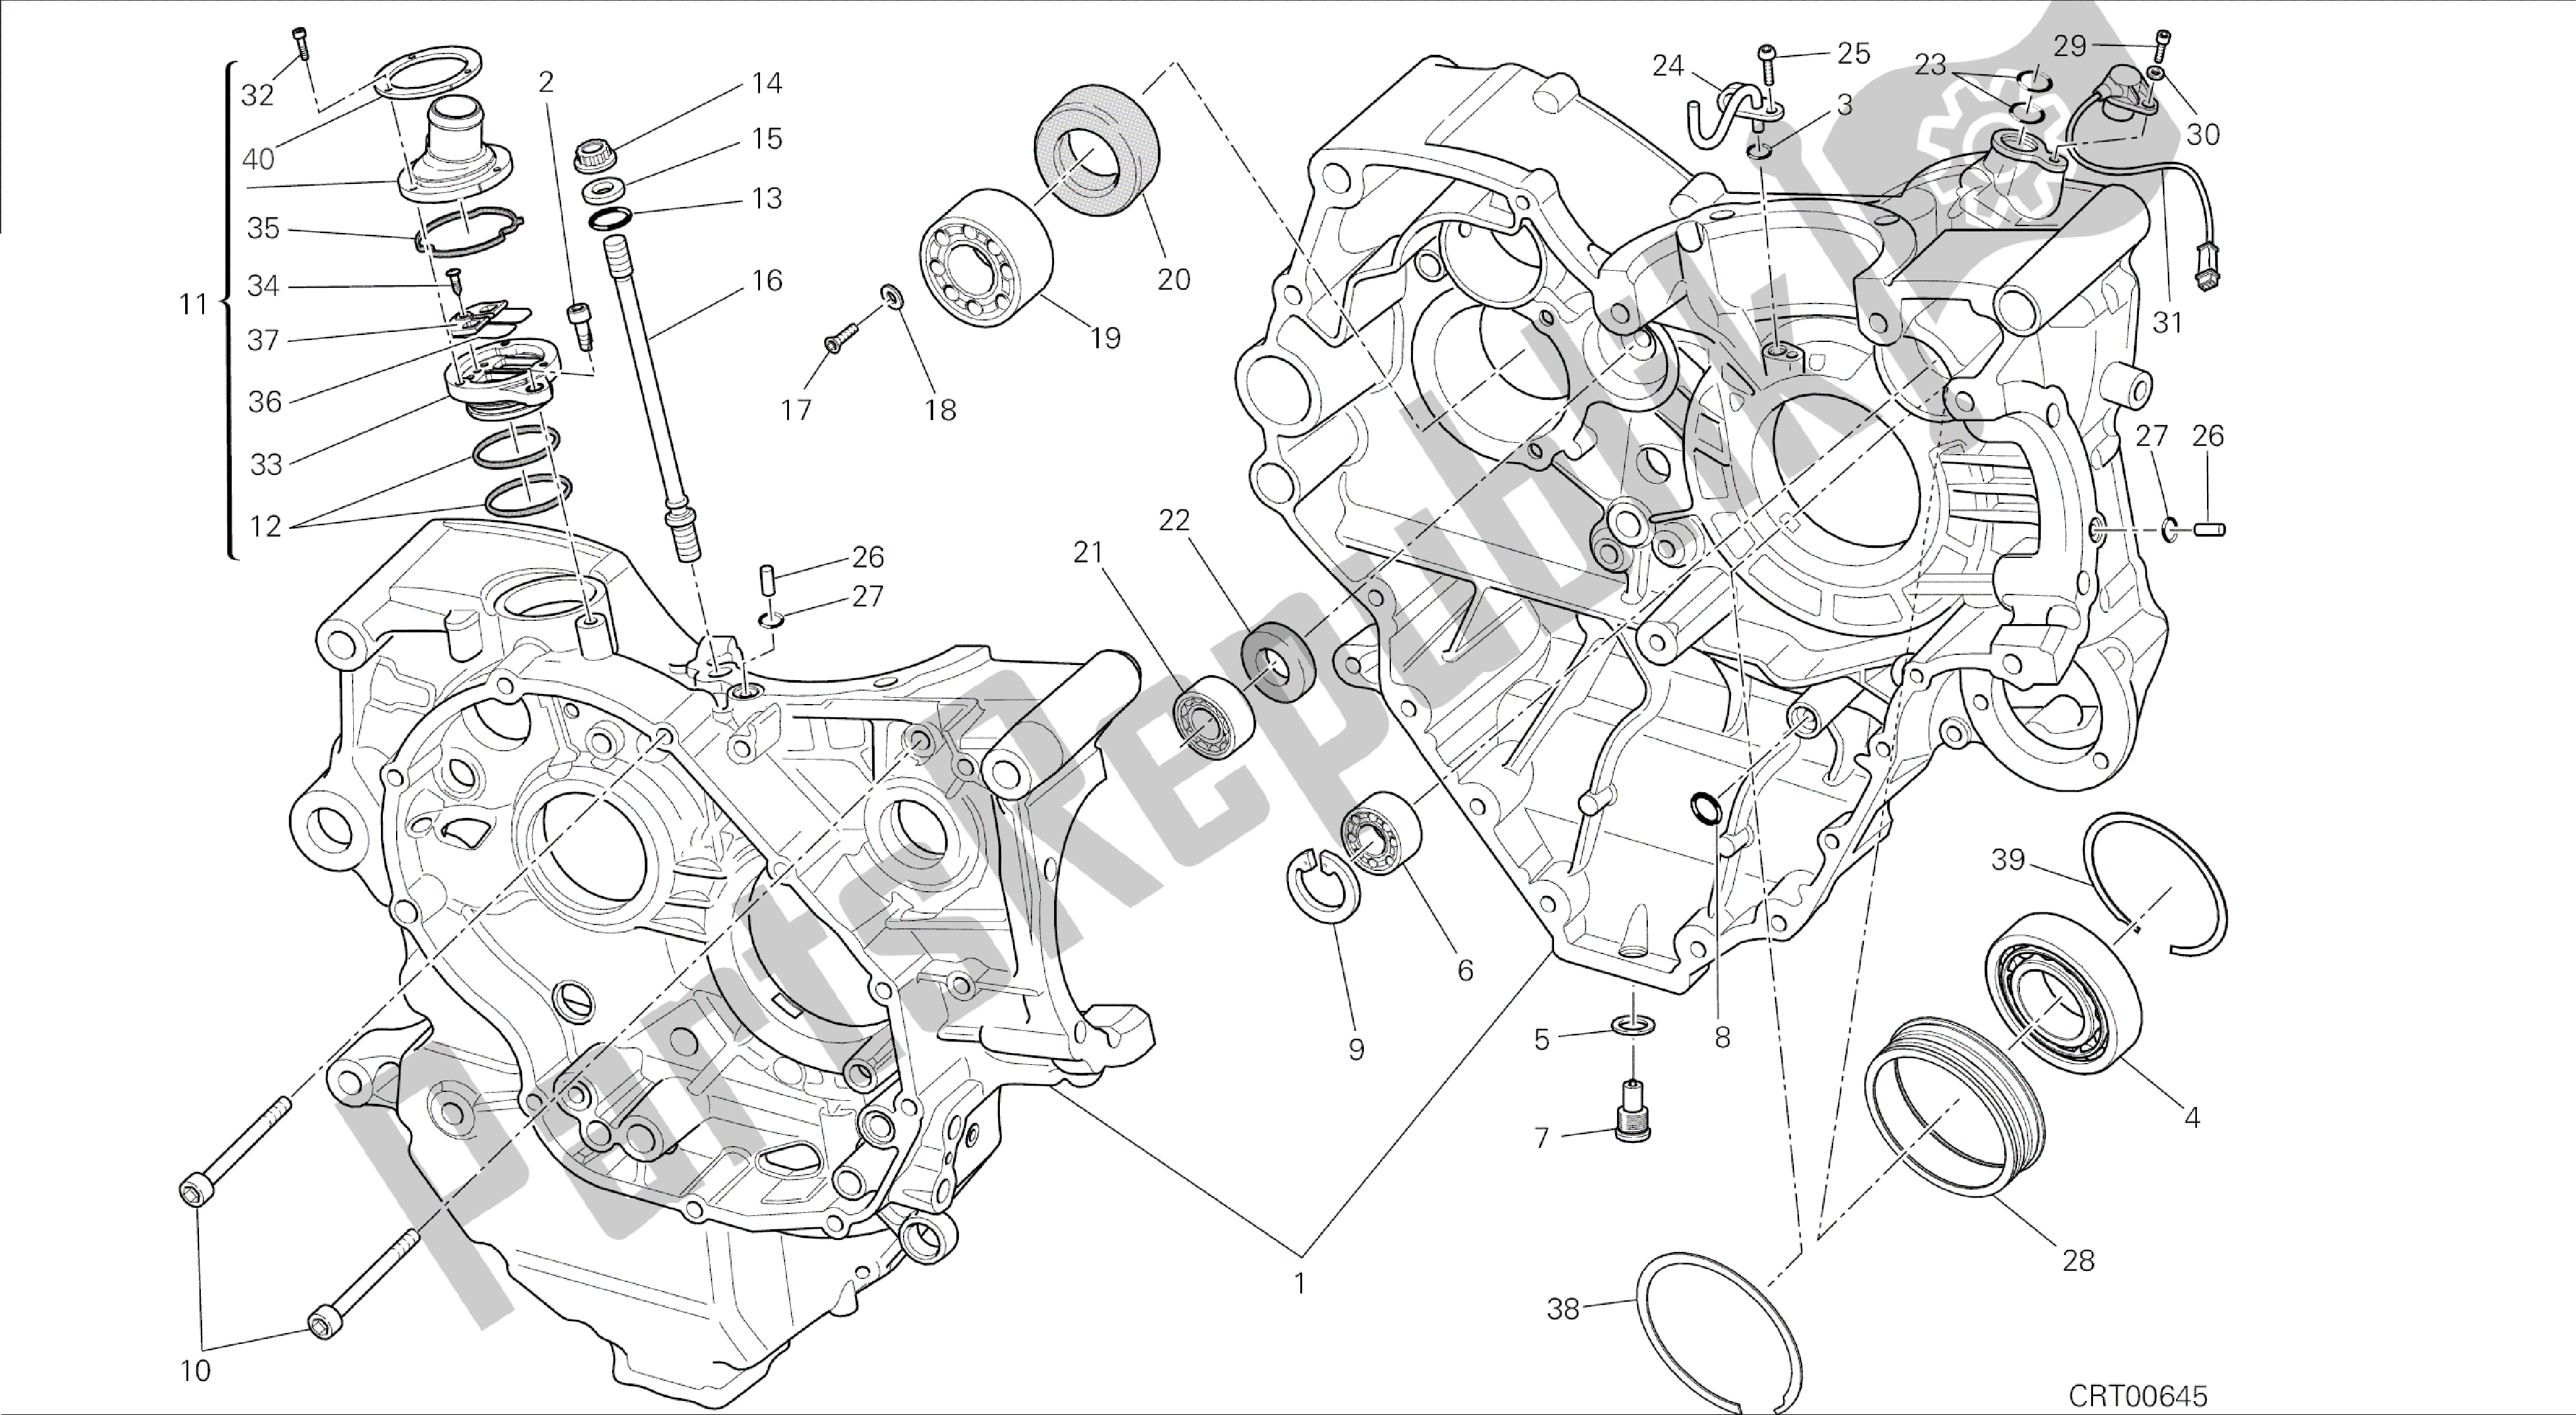 Todas las partes para Dibujo 010 - Motor De Grupo Par De Cárter Medio [mod: Dvl] de Ducati Diavel 1200 2015